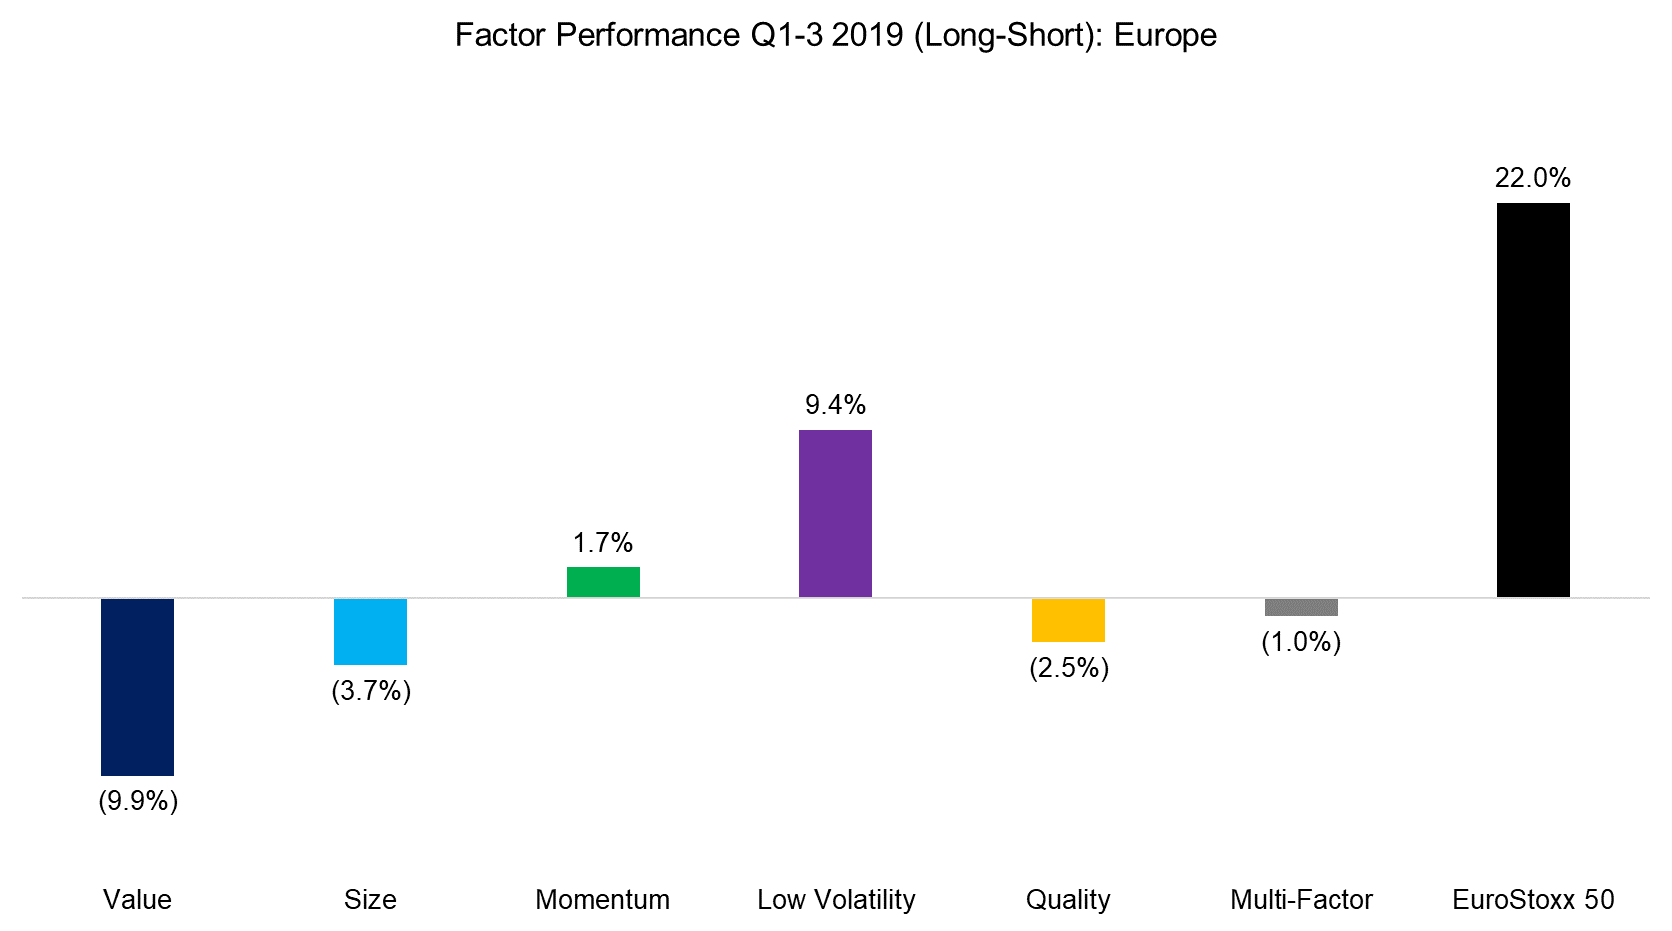 Factor Performance Q1-3 2019 (Long-Short) Europe